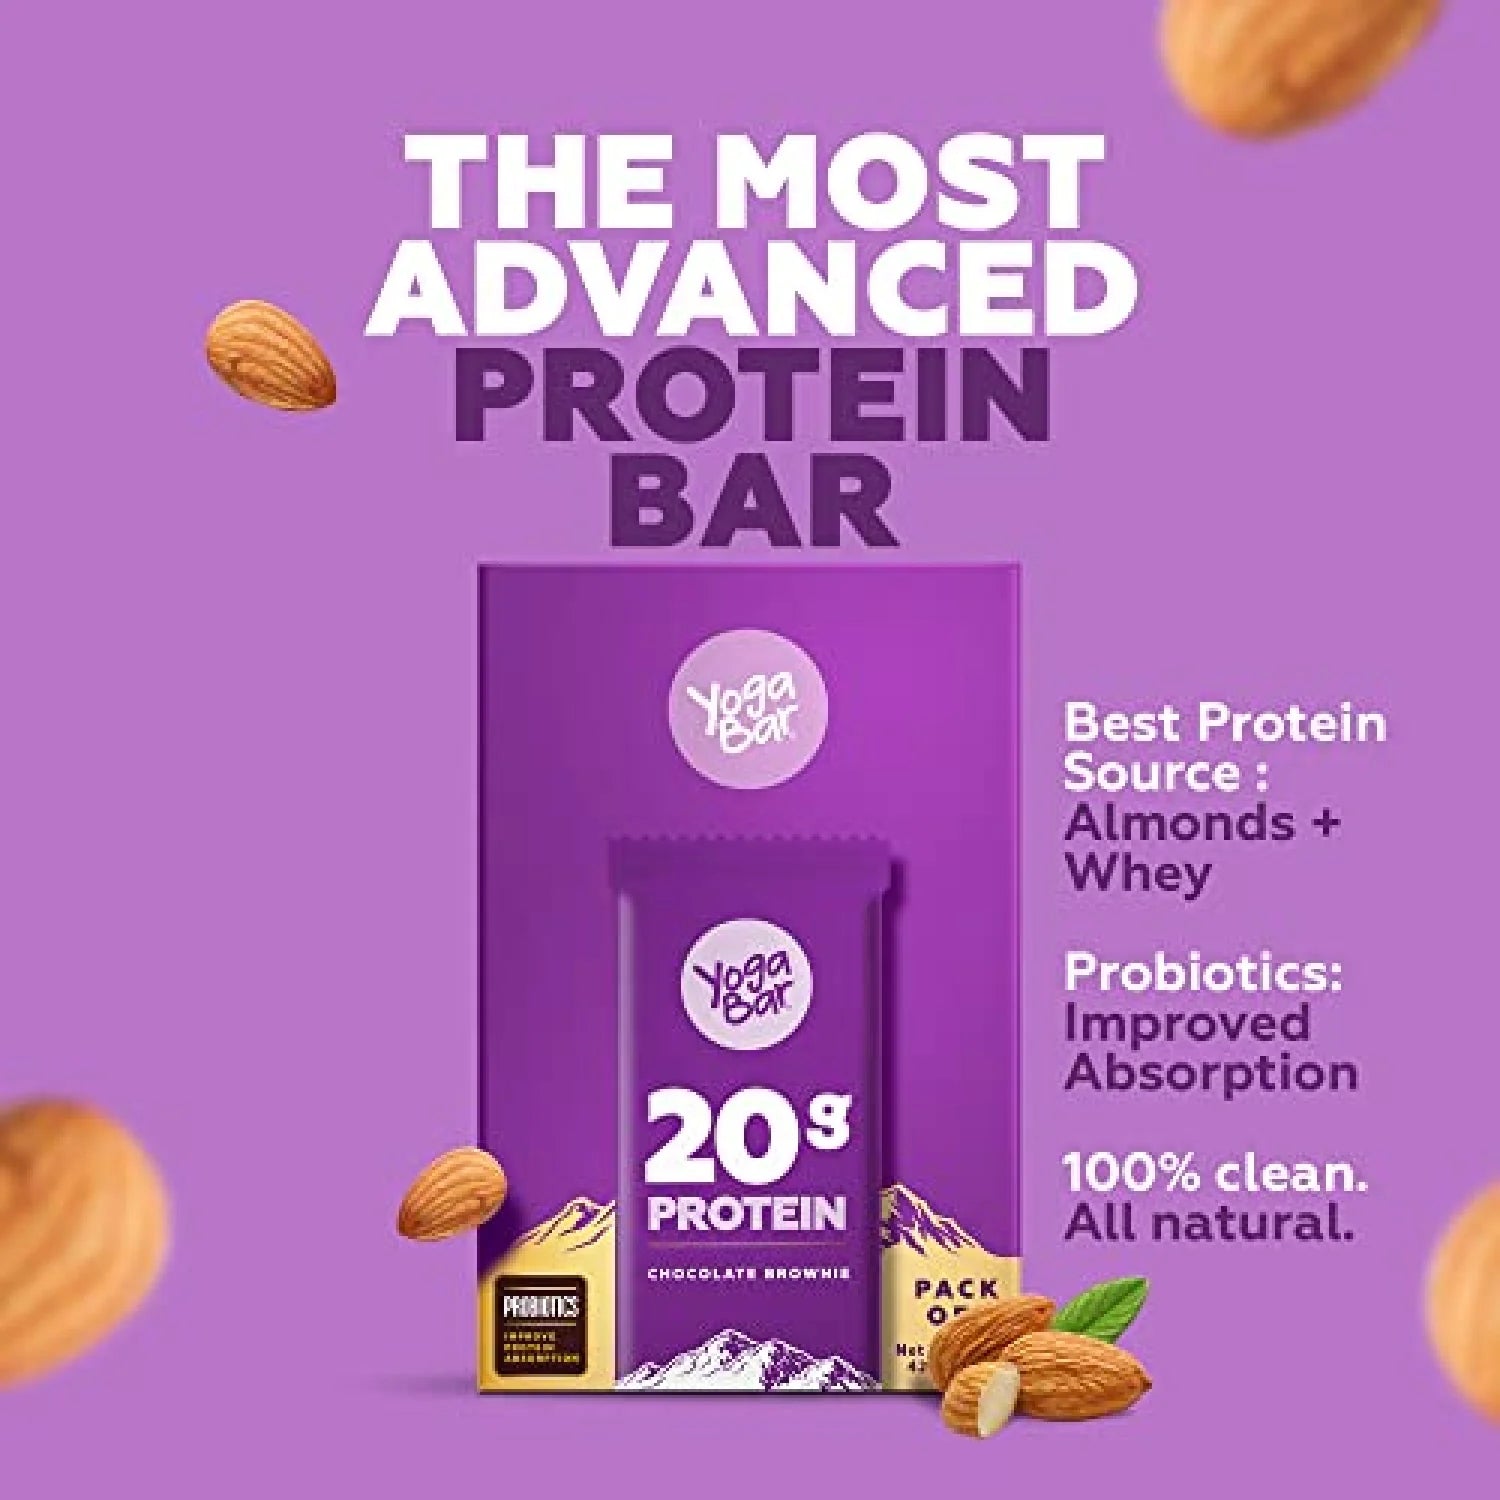 Yogabar Protein Bar Variety Box - ( Pack of 6 Bars )